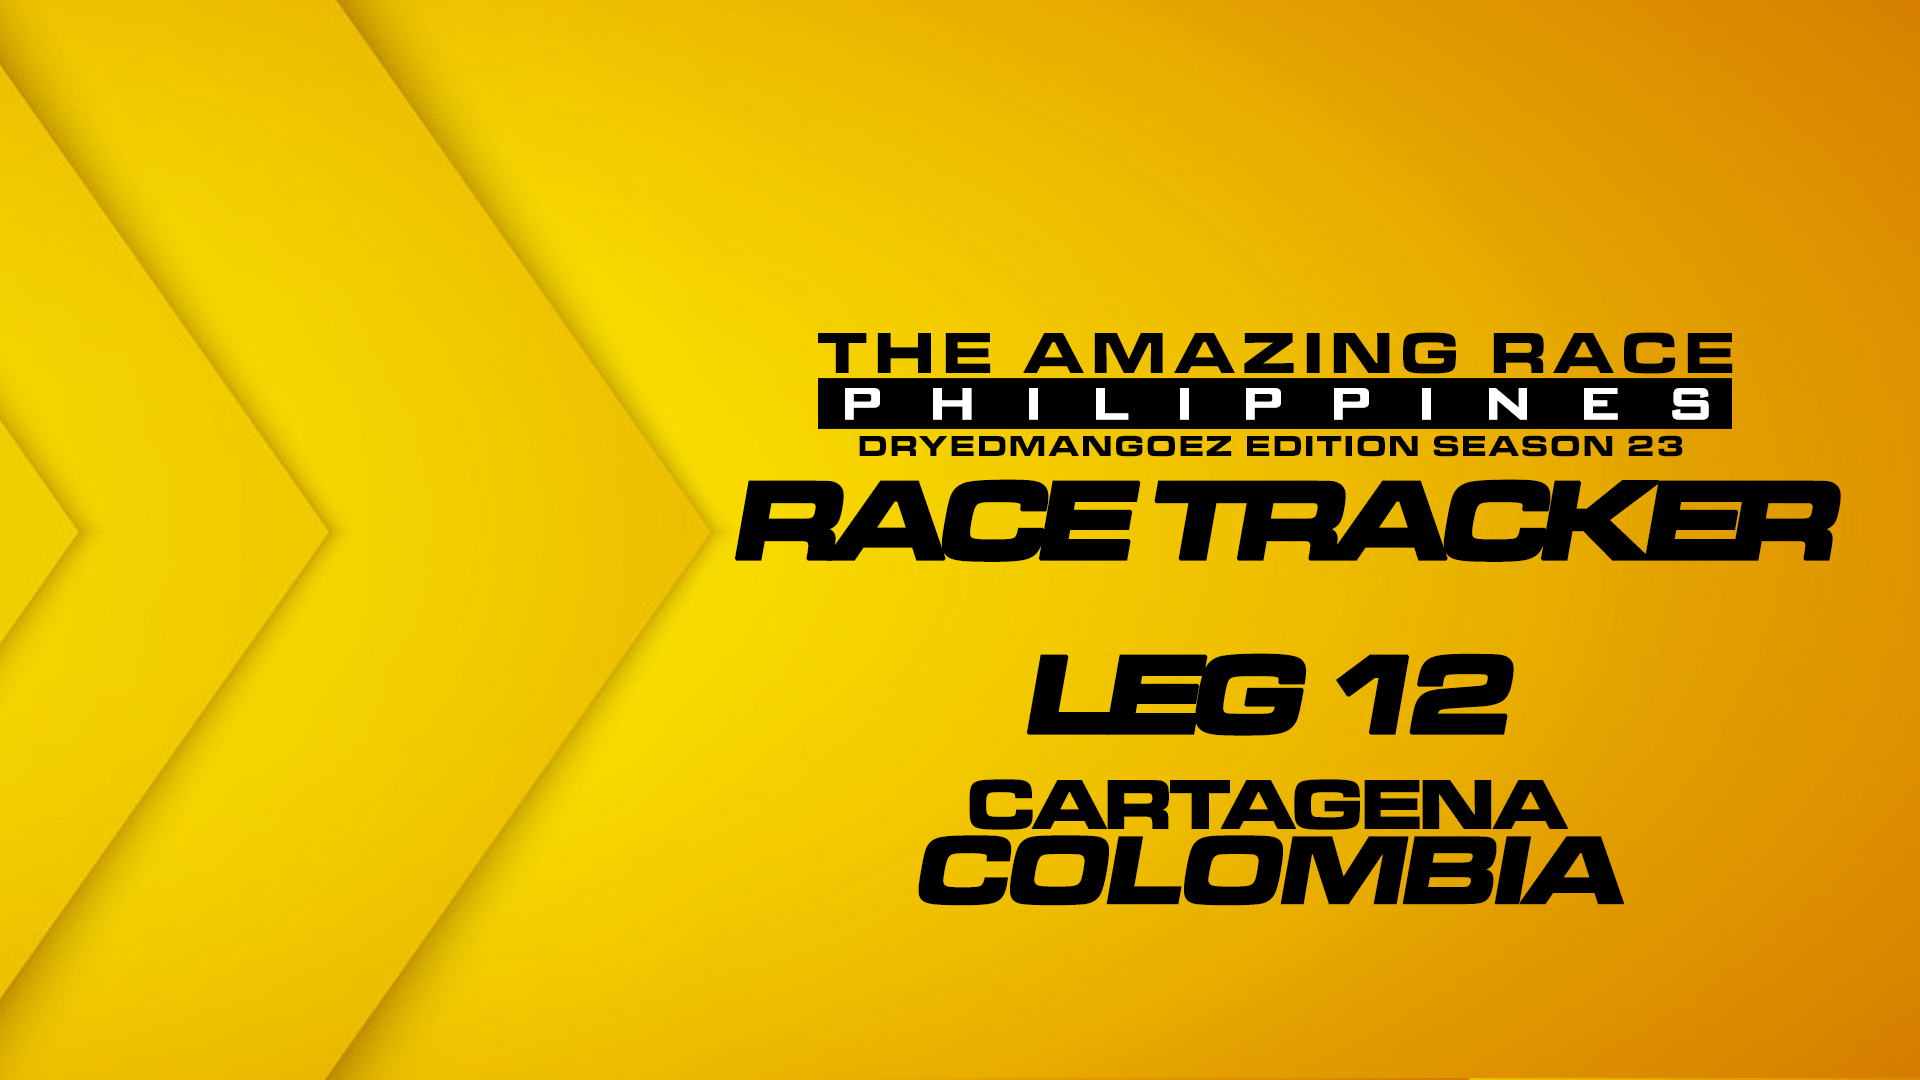 The Amazing Race Philippines: DryedMangoez Edition Season 23 Race Tracker – Leg 12